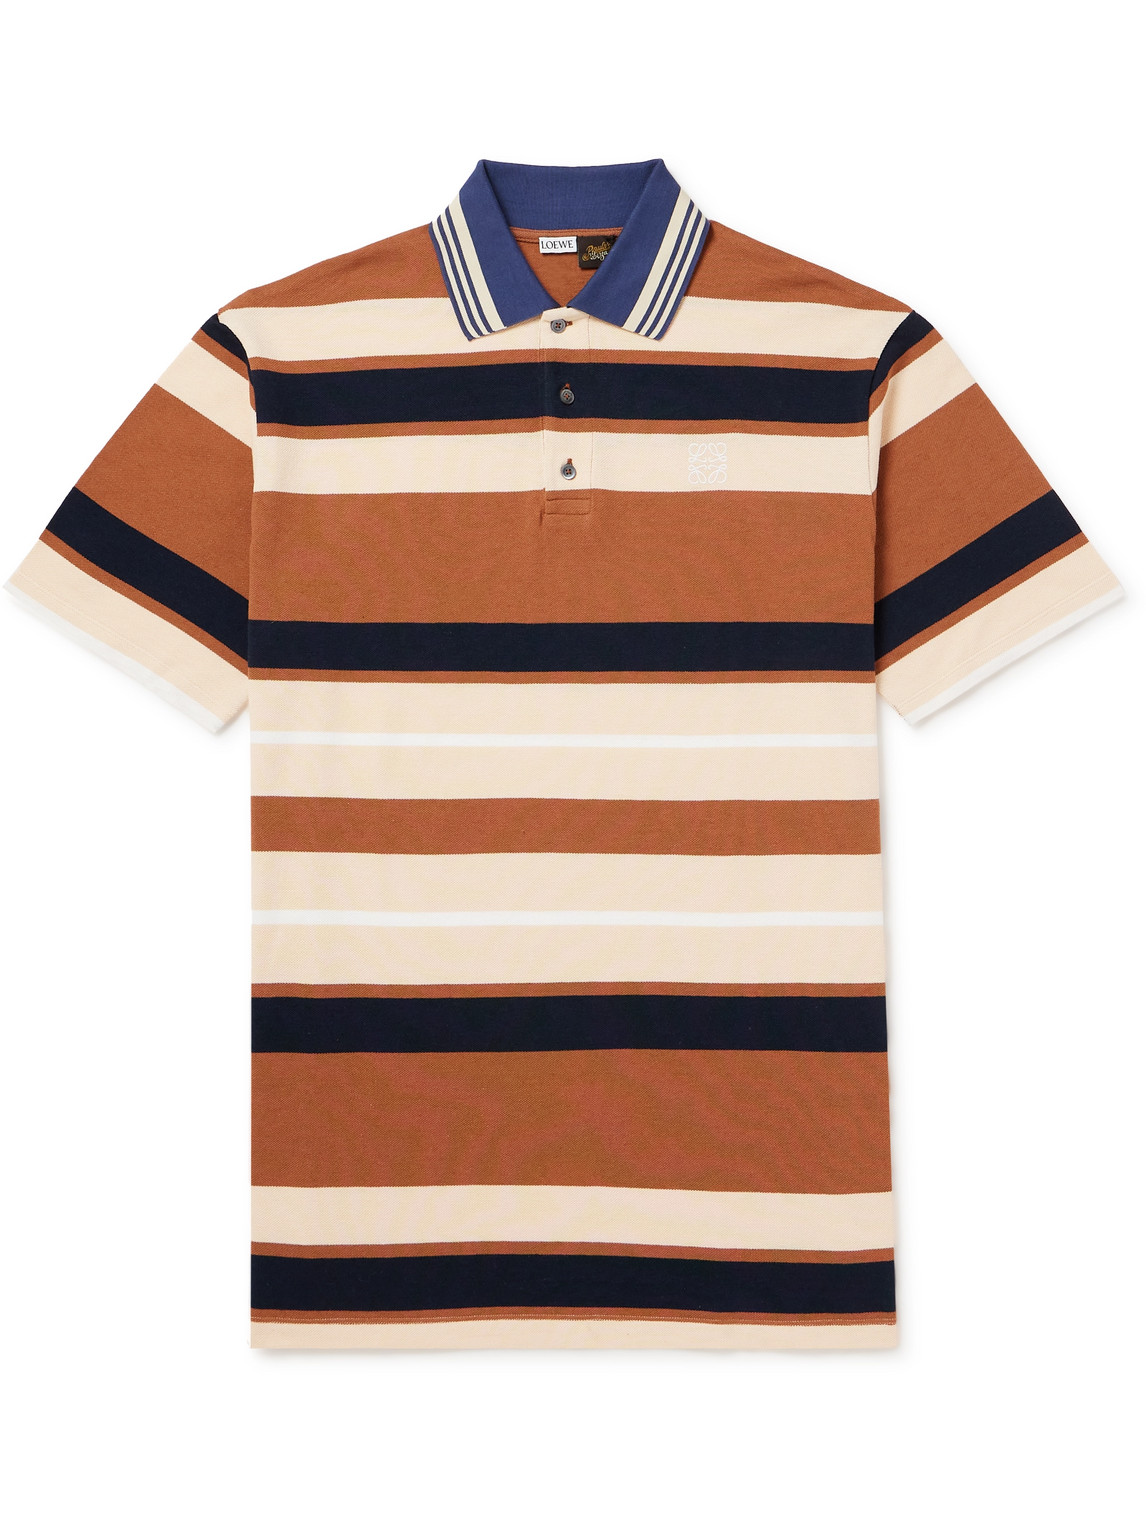 LOEWE - Paula's Ibiza Striped Cotton and Linen-Blend Piqué Polo Shirt - Men - Brown - XL von LOEWE